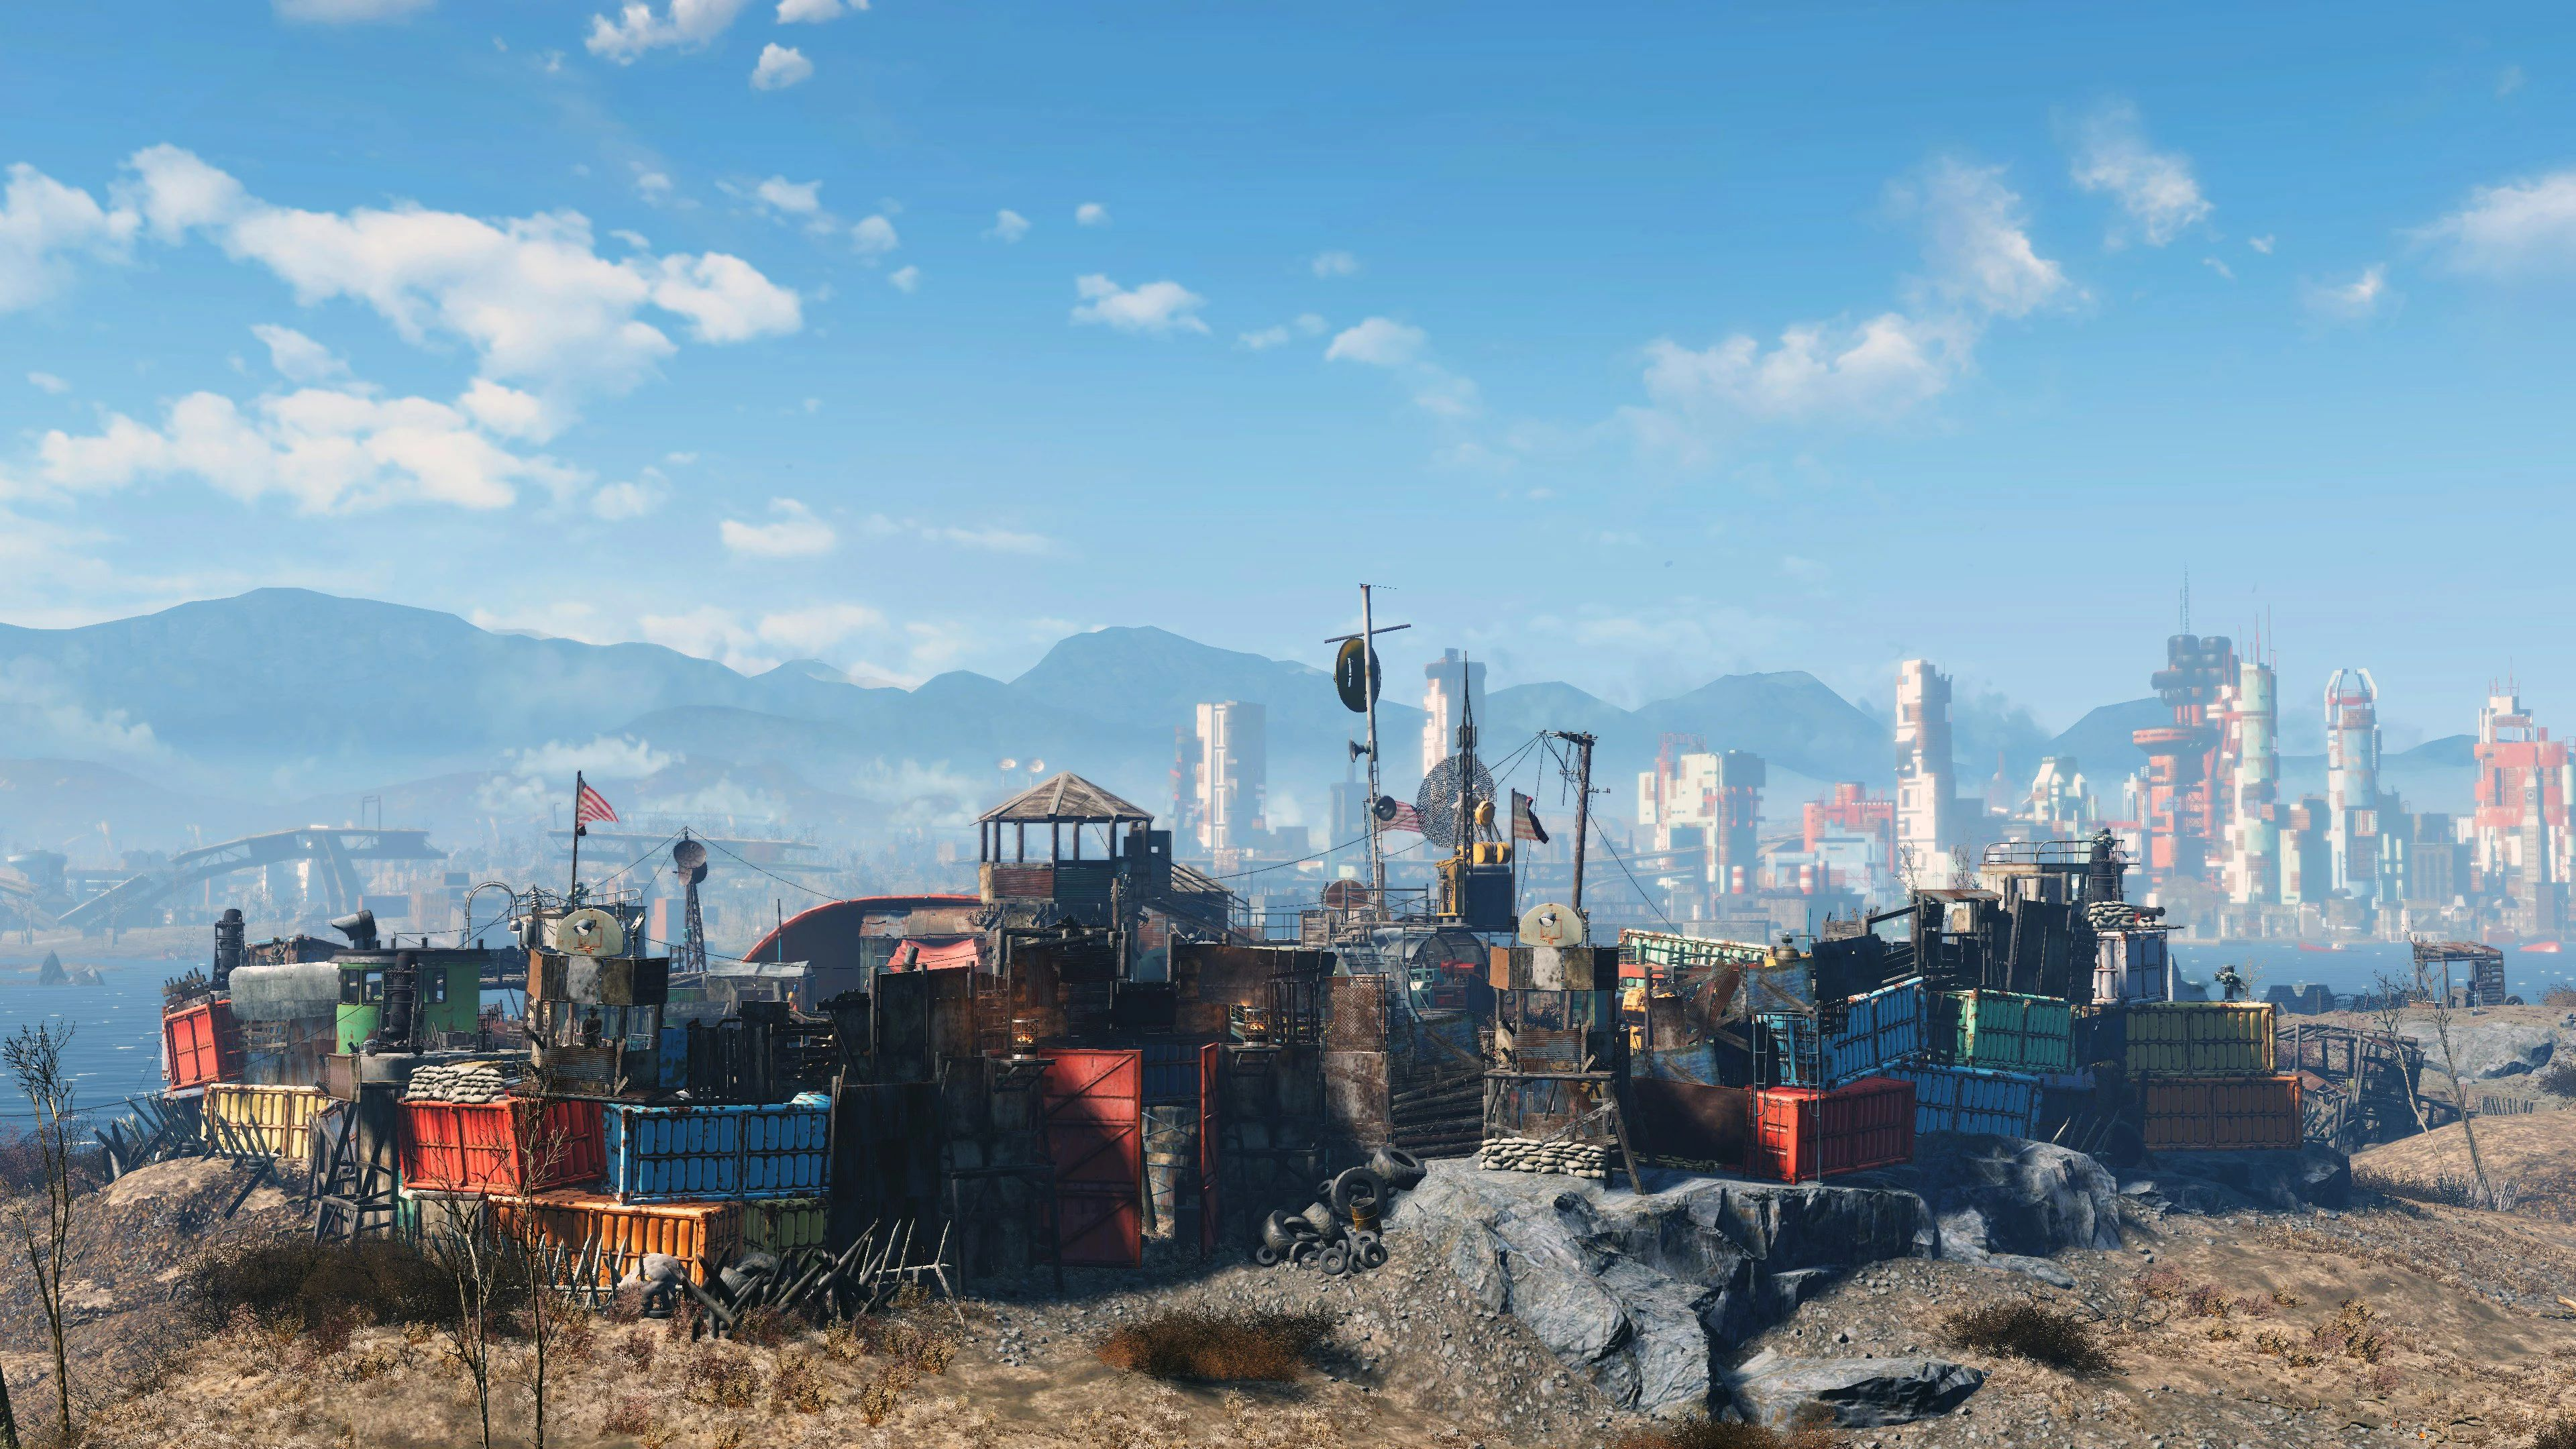 Sim settlements 2 chapter 2. Fallout 4 стол градостроительства SIM Settlements. Fallout 4 шприц. SIM Settlements Джейка. SIM Settlements лазерный револьвер.